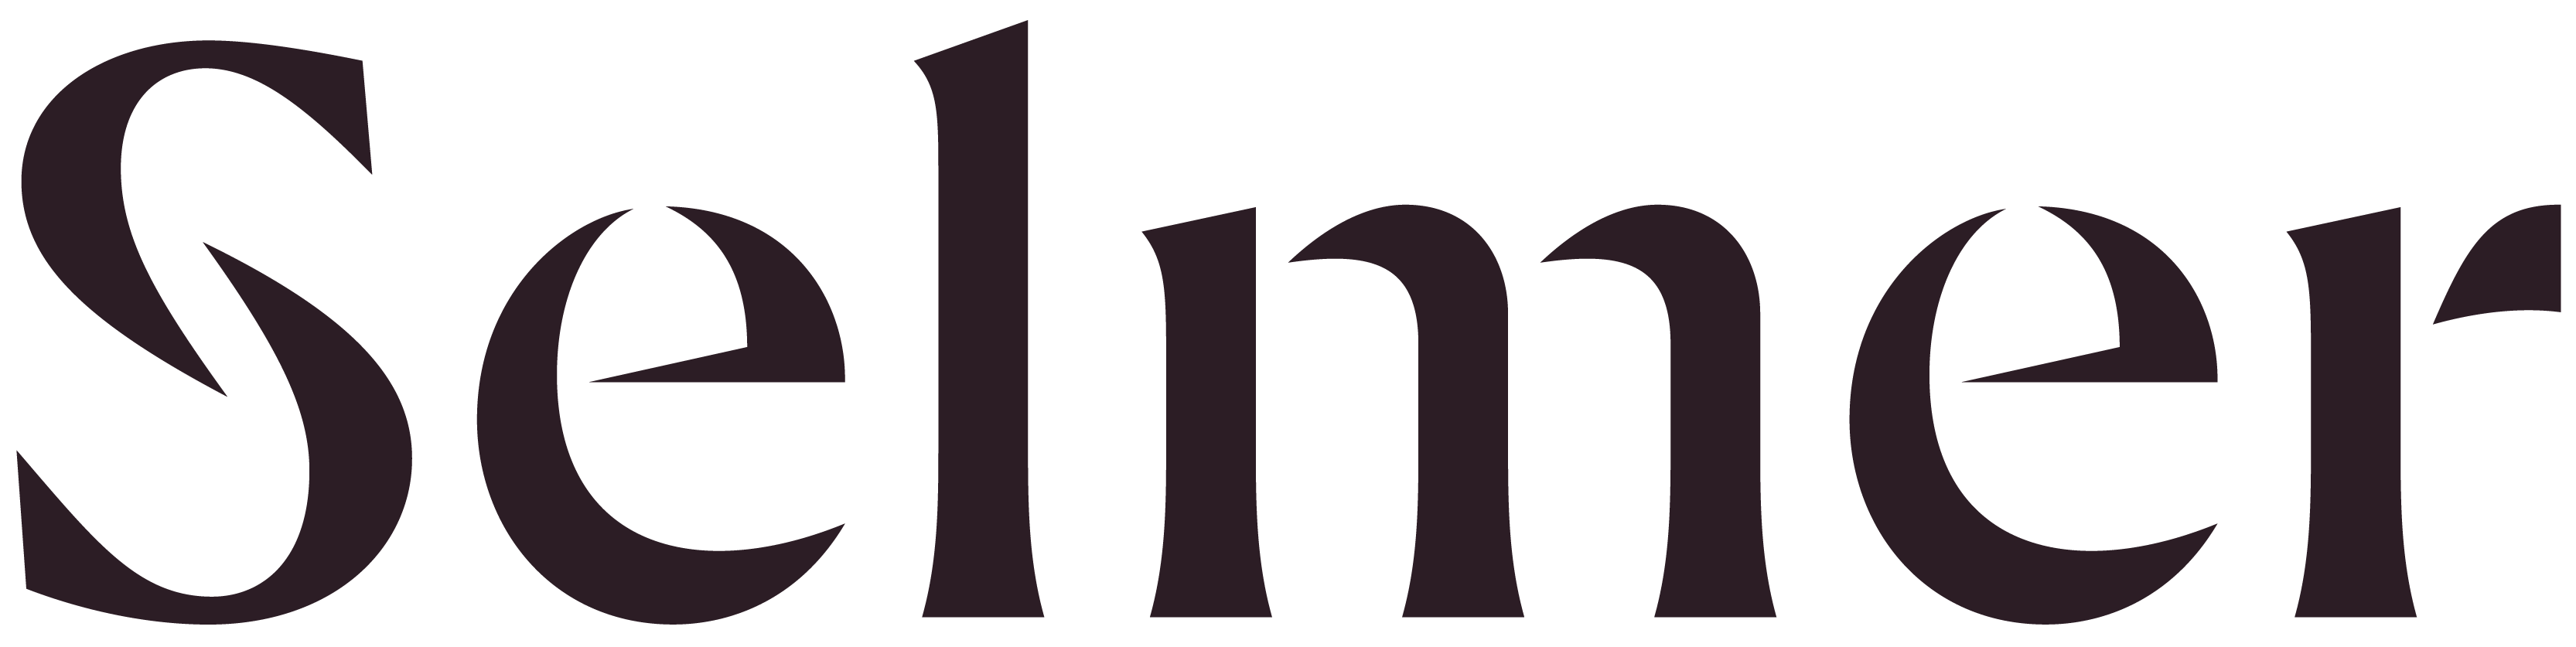 Selmer logo - aubergine - AmCham Norway